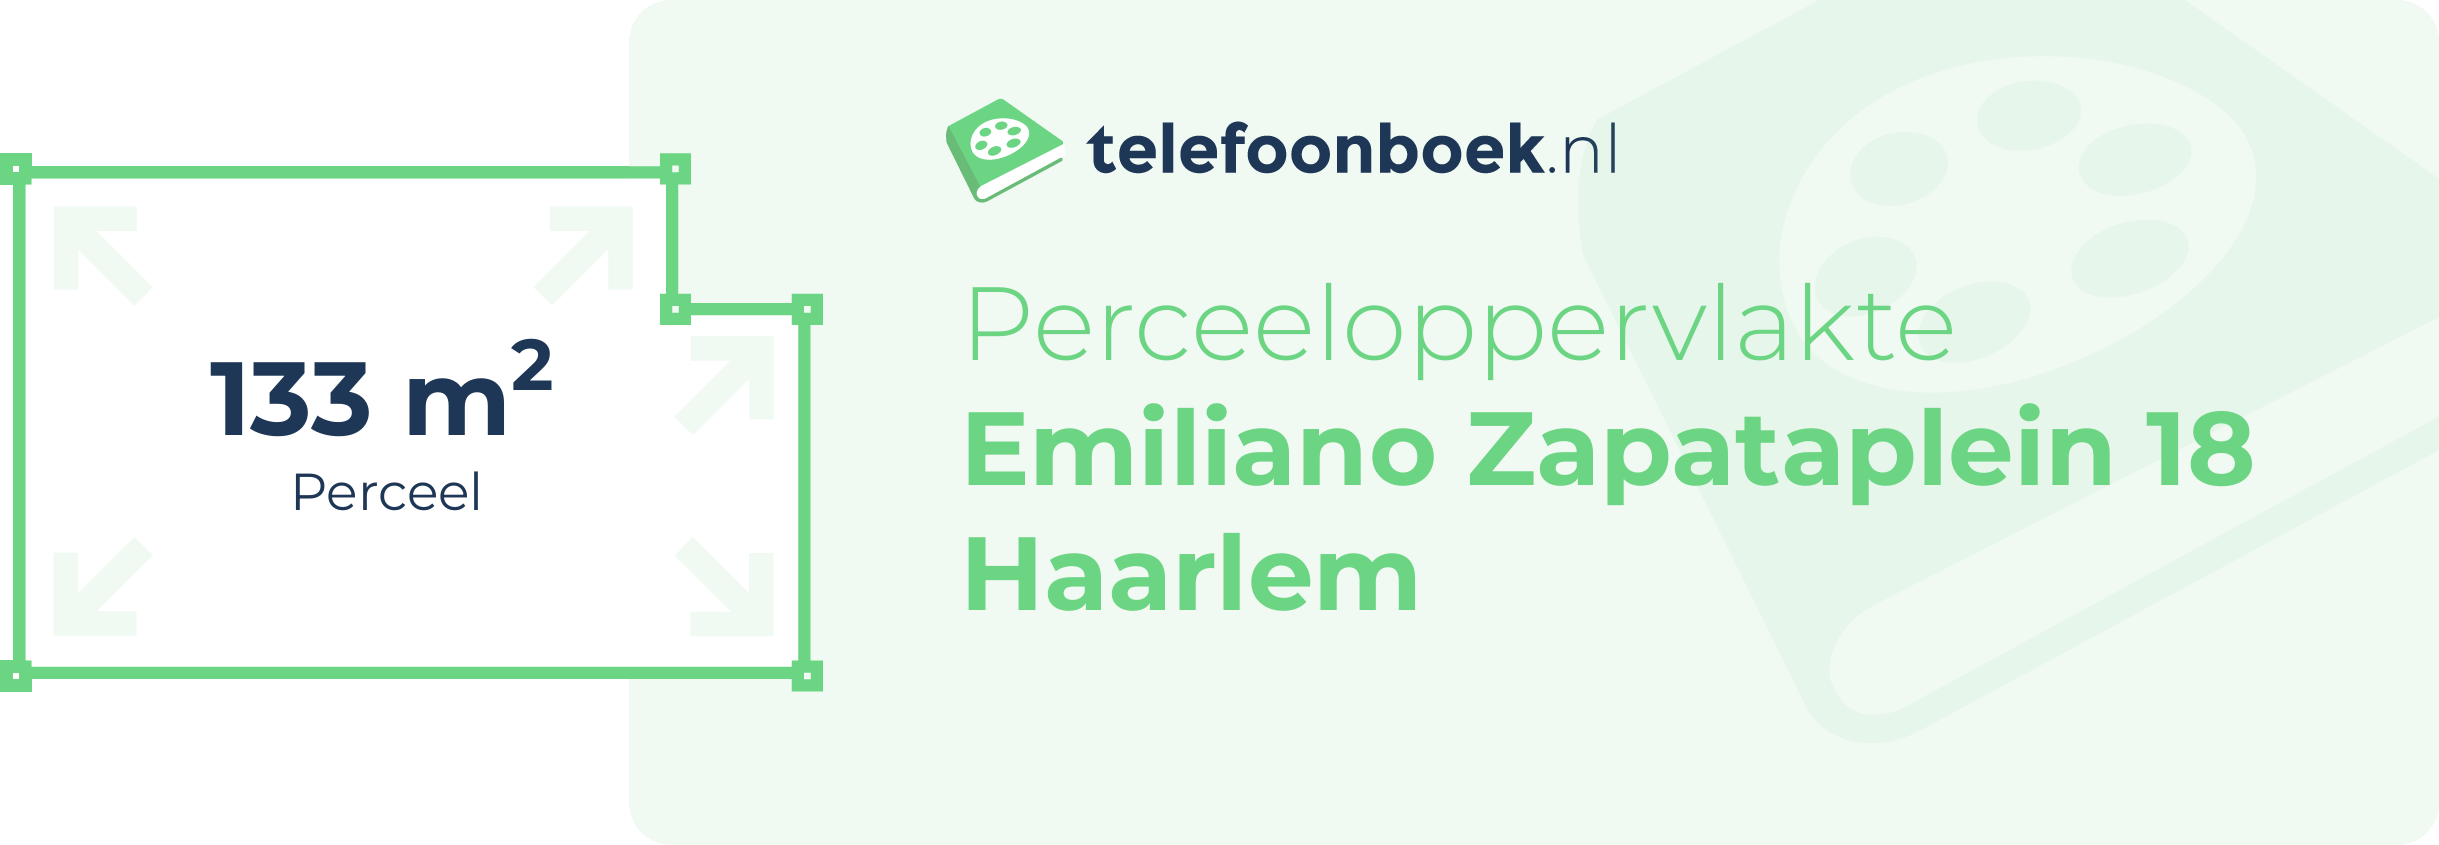 Perceeloppervlakte Emiliano Zapataplein 18 Haarlem